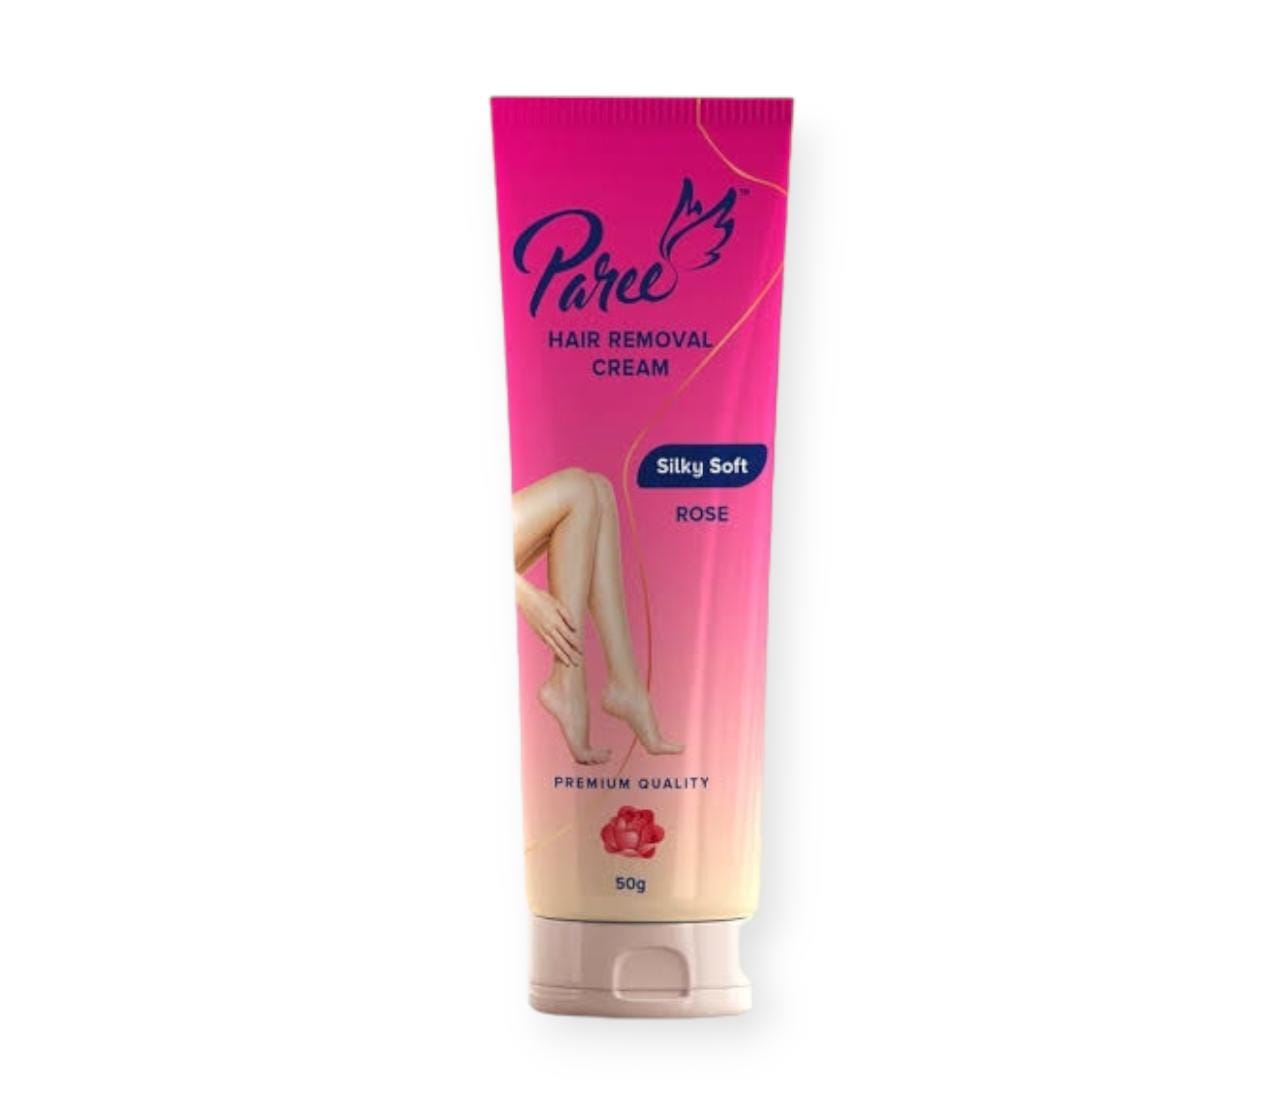 Paree hair removal rose cream